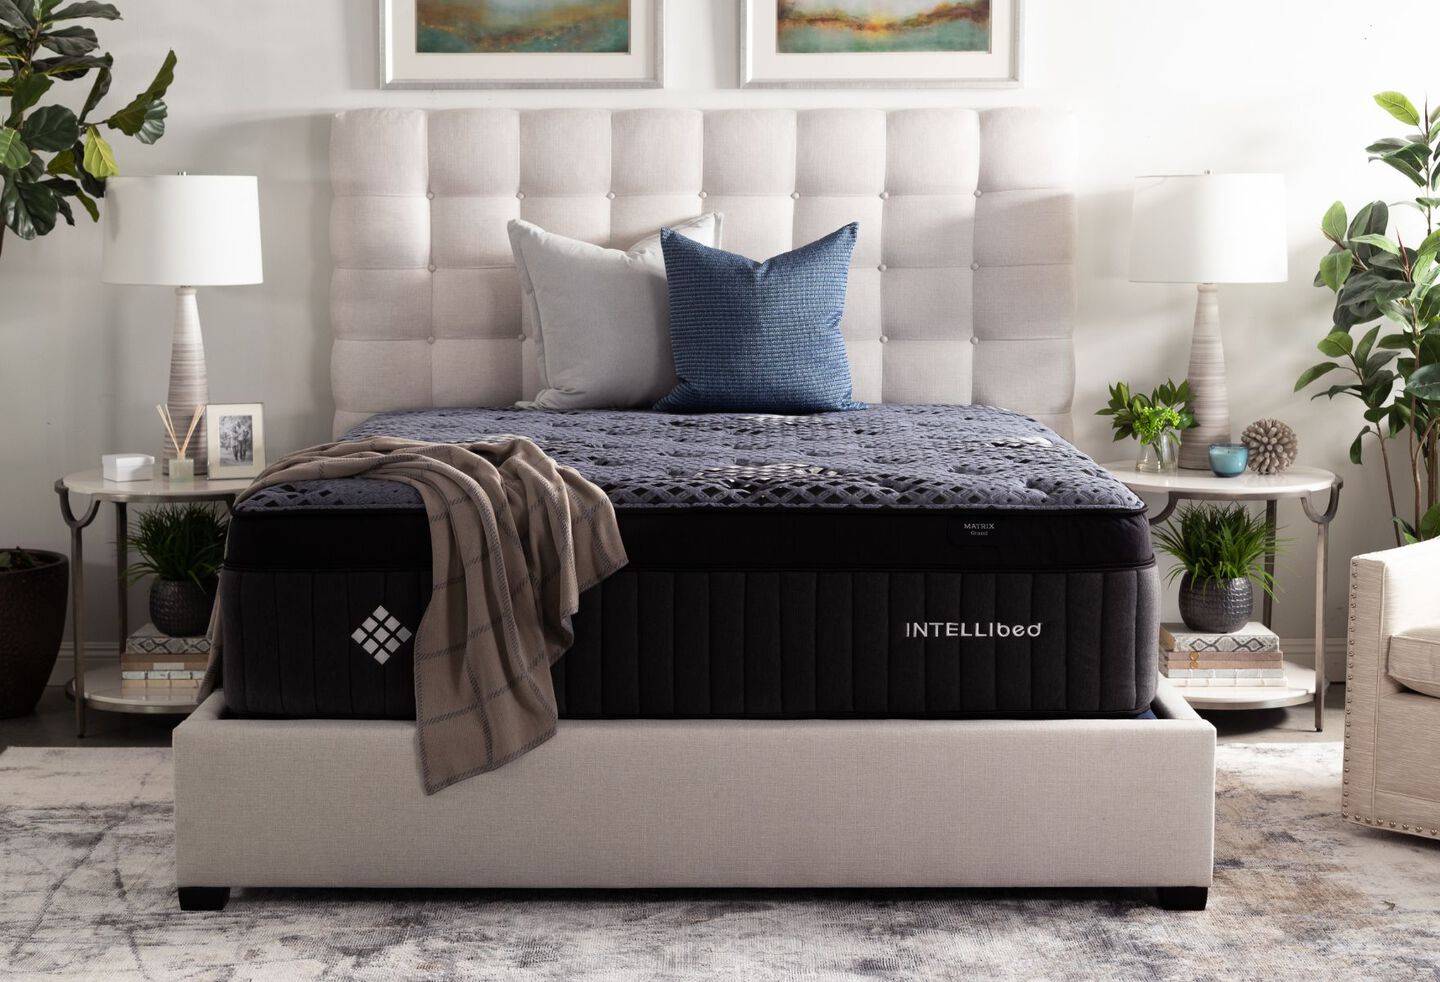 Navy blue americana mattress on top of a grey bedframe